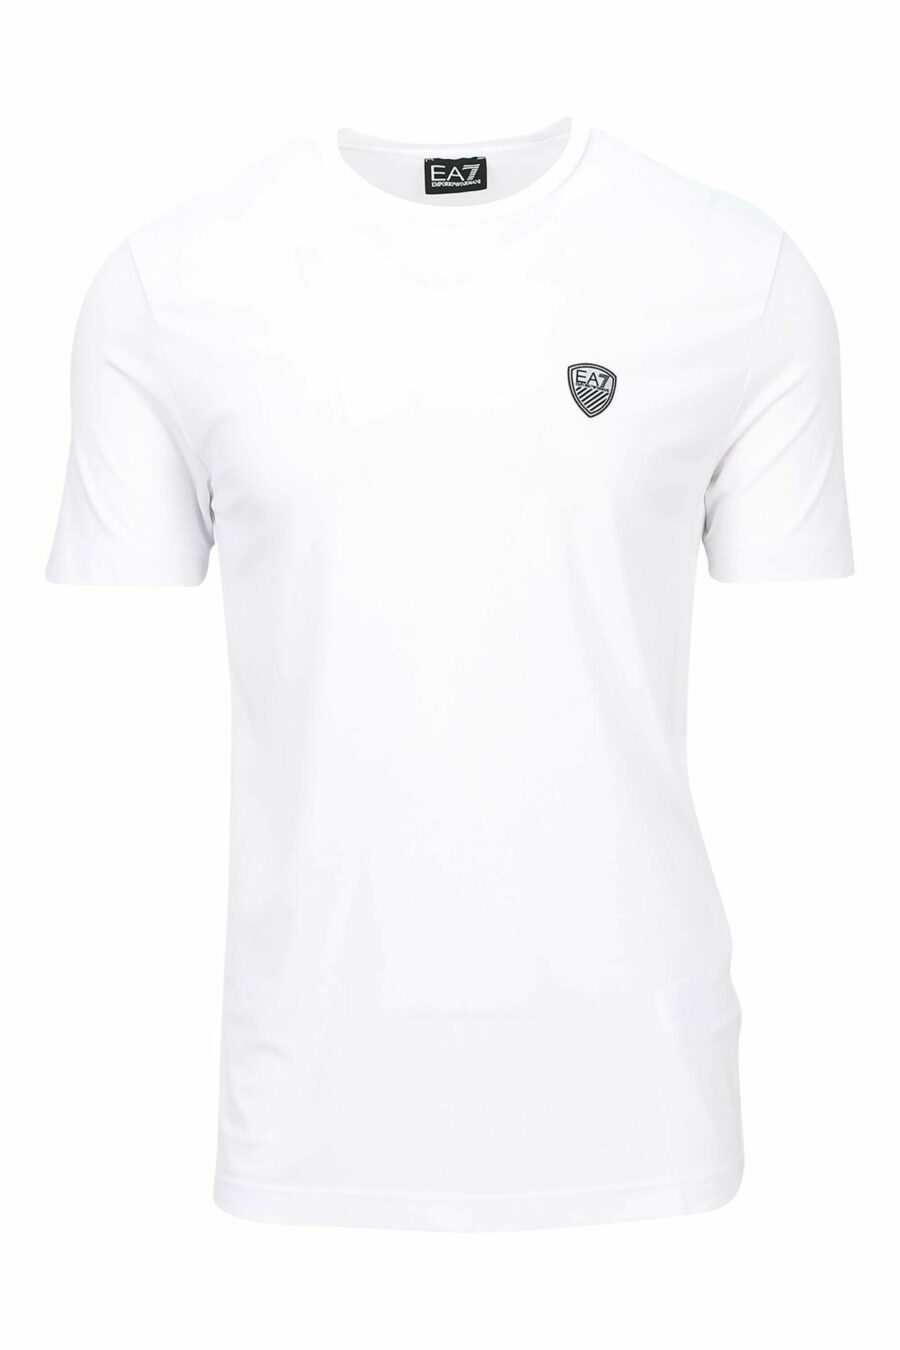 T-shirt blanc avec le mini-logo "lux identity" - 8056787978898 scaled